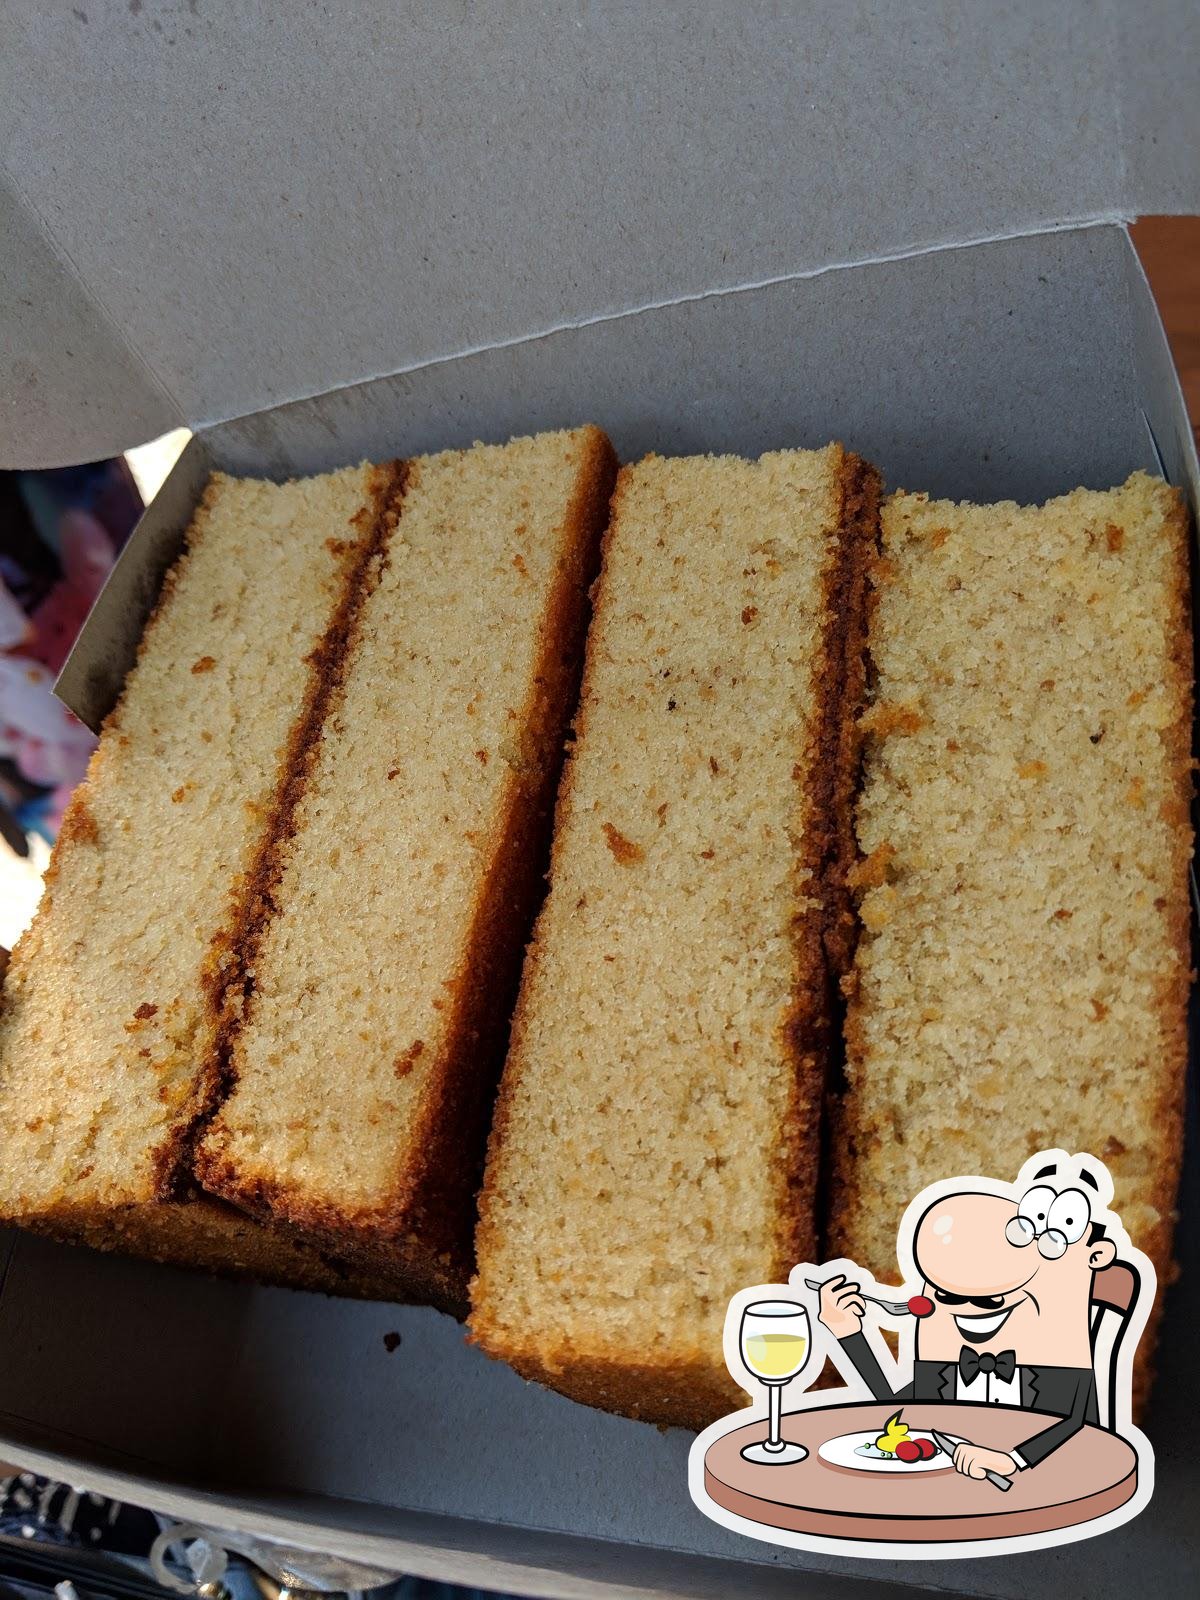 Homemade] Japanese Castella Cake : r/food